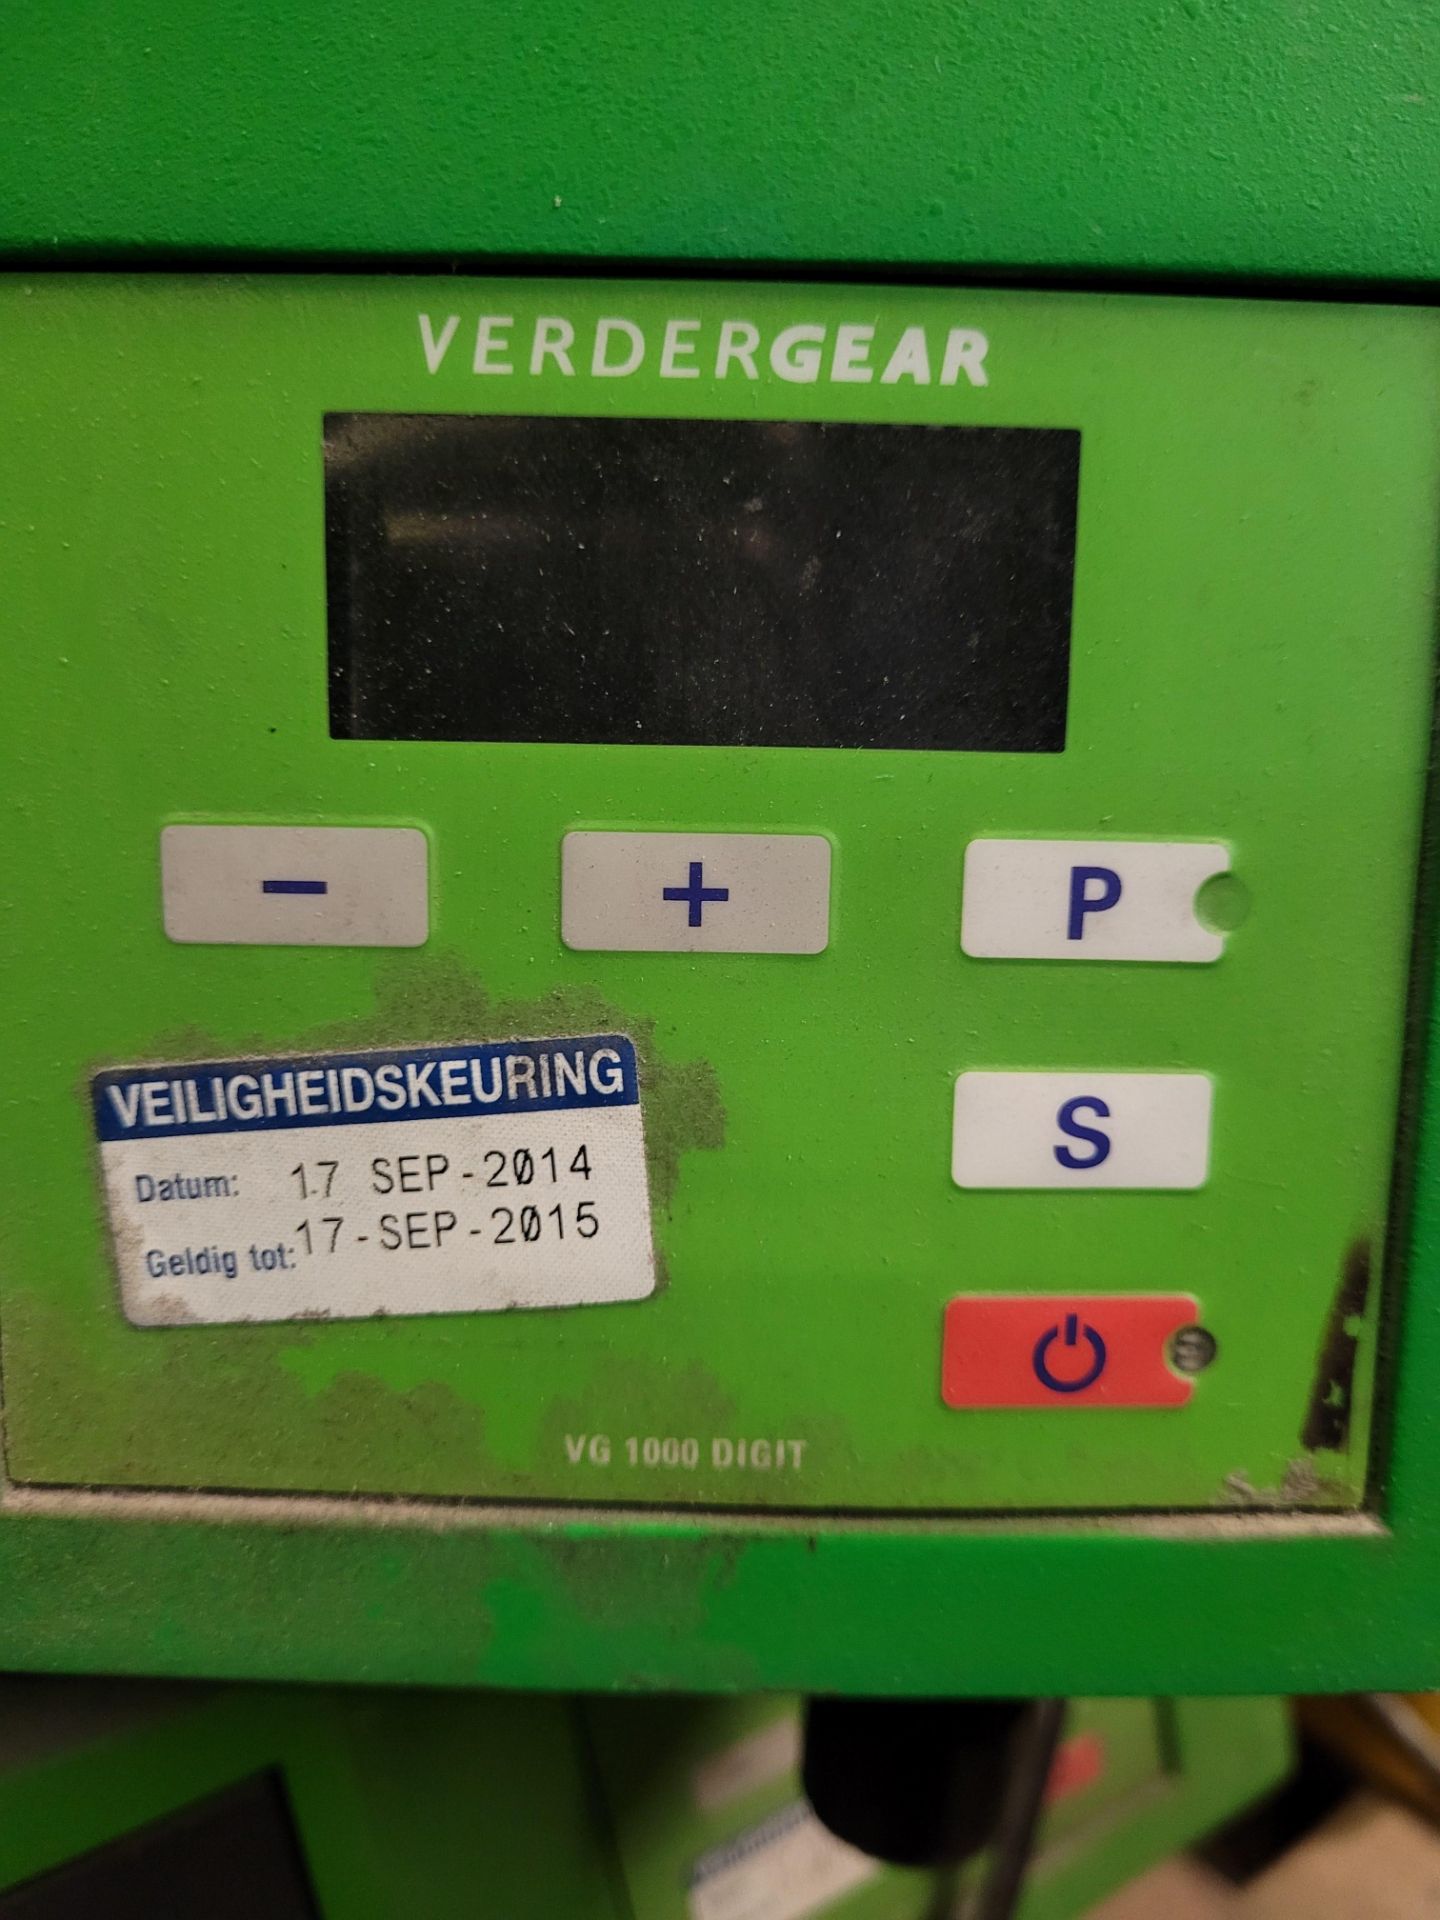 Peristaltic pump, Verdergear - Image 2 of 2